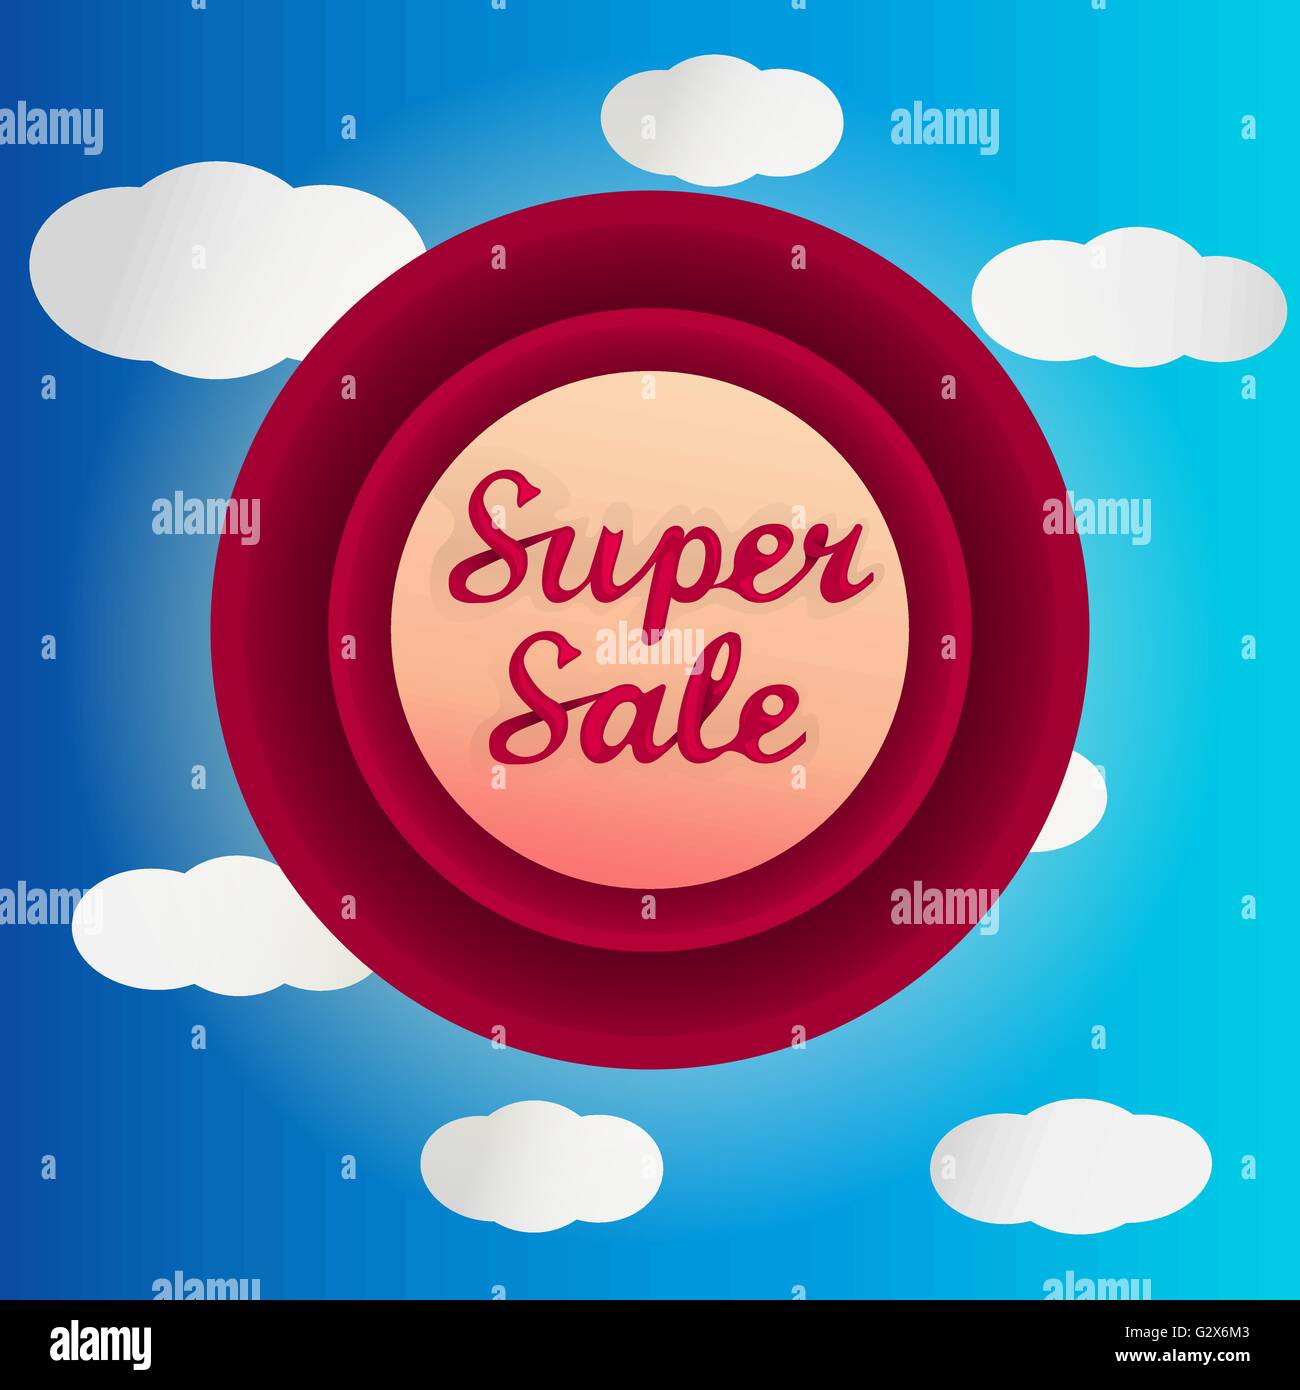 Super sale circle label Stock Vector